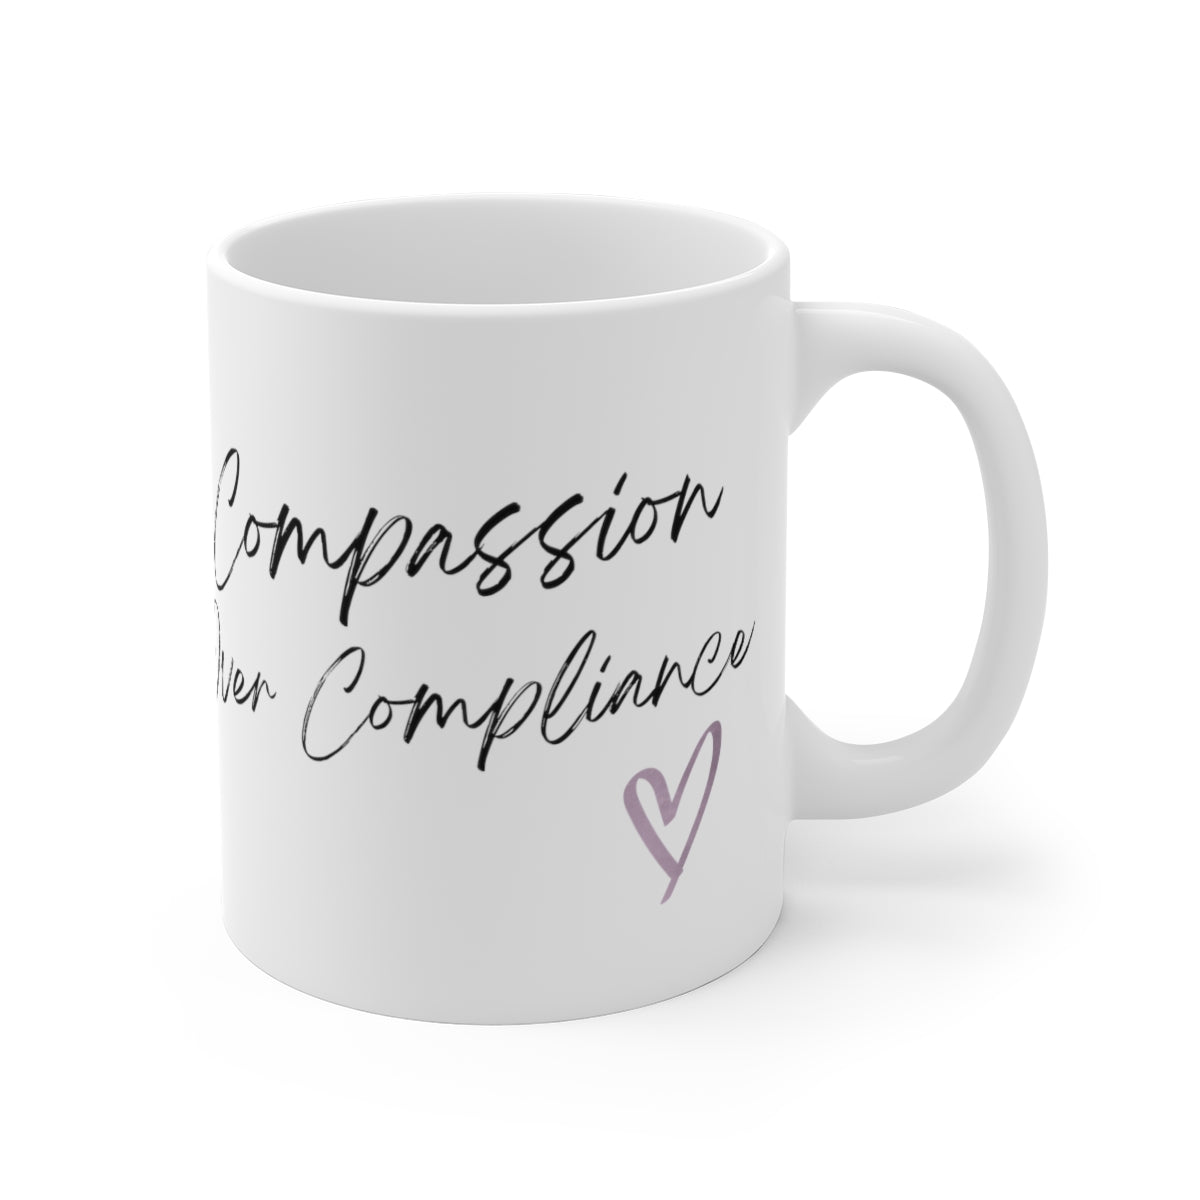 Compassion Over Compliance Mug